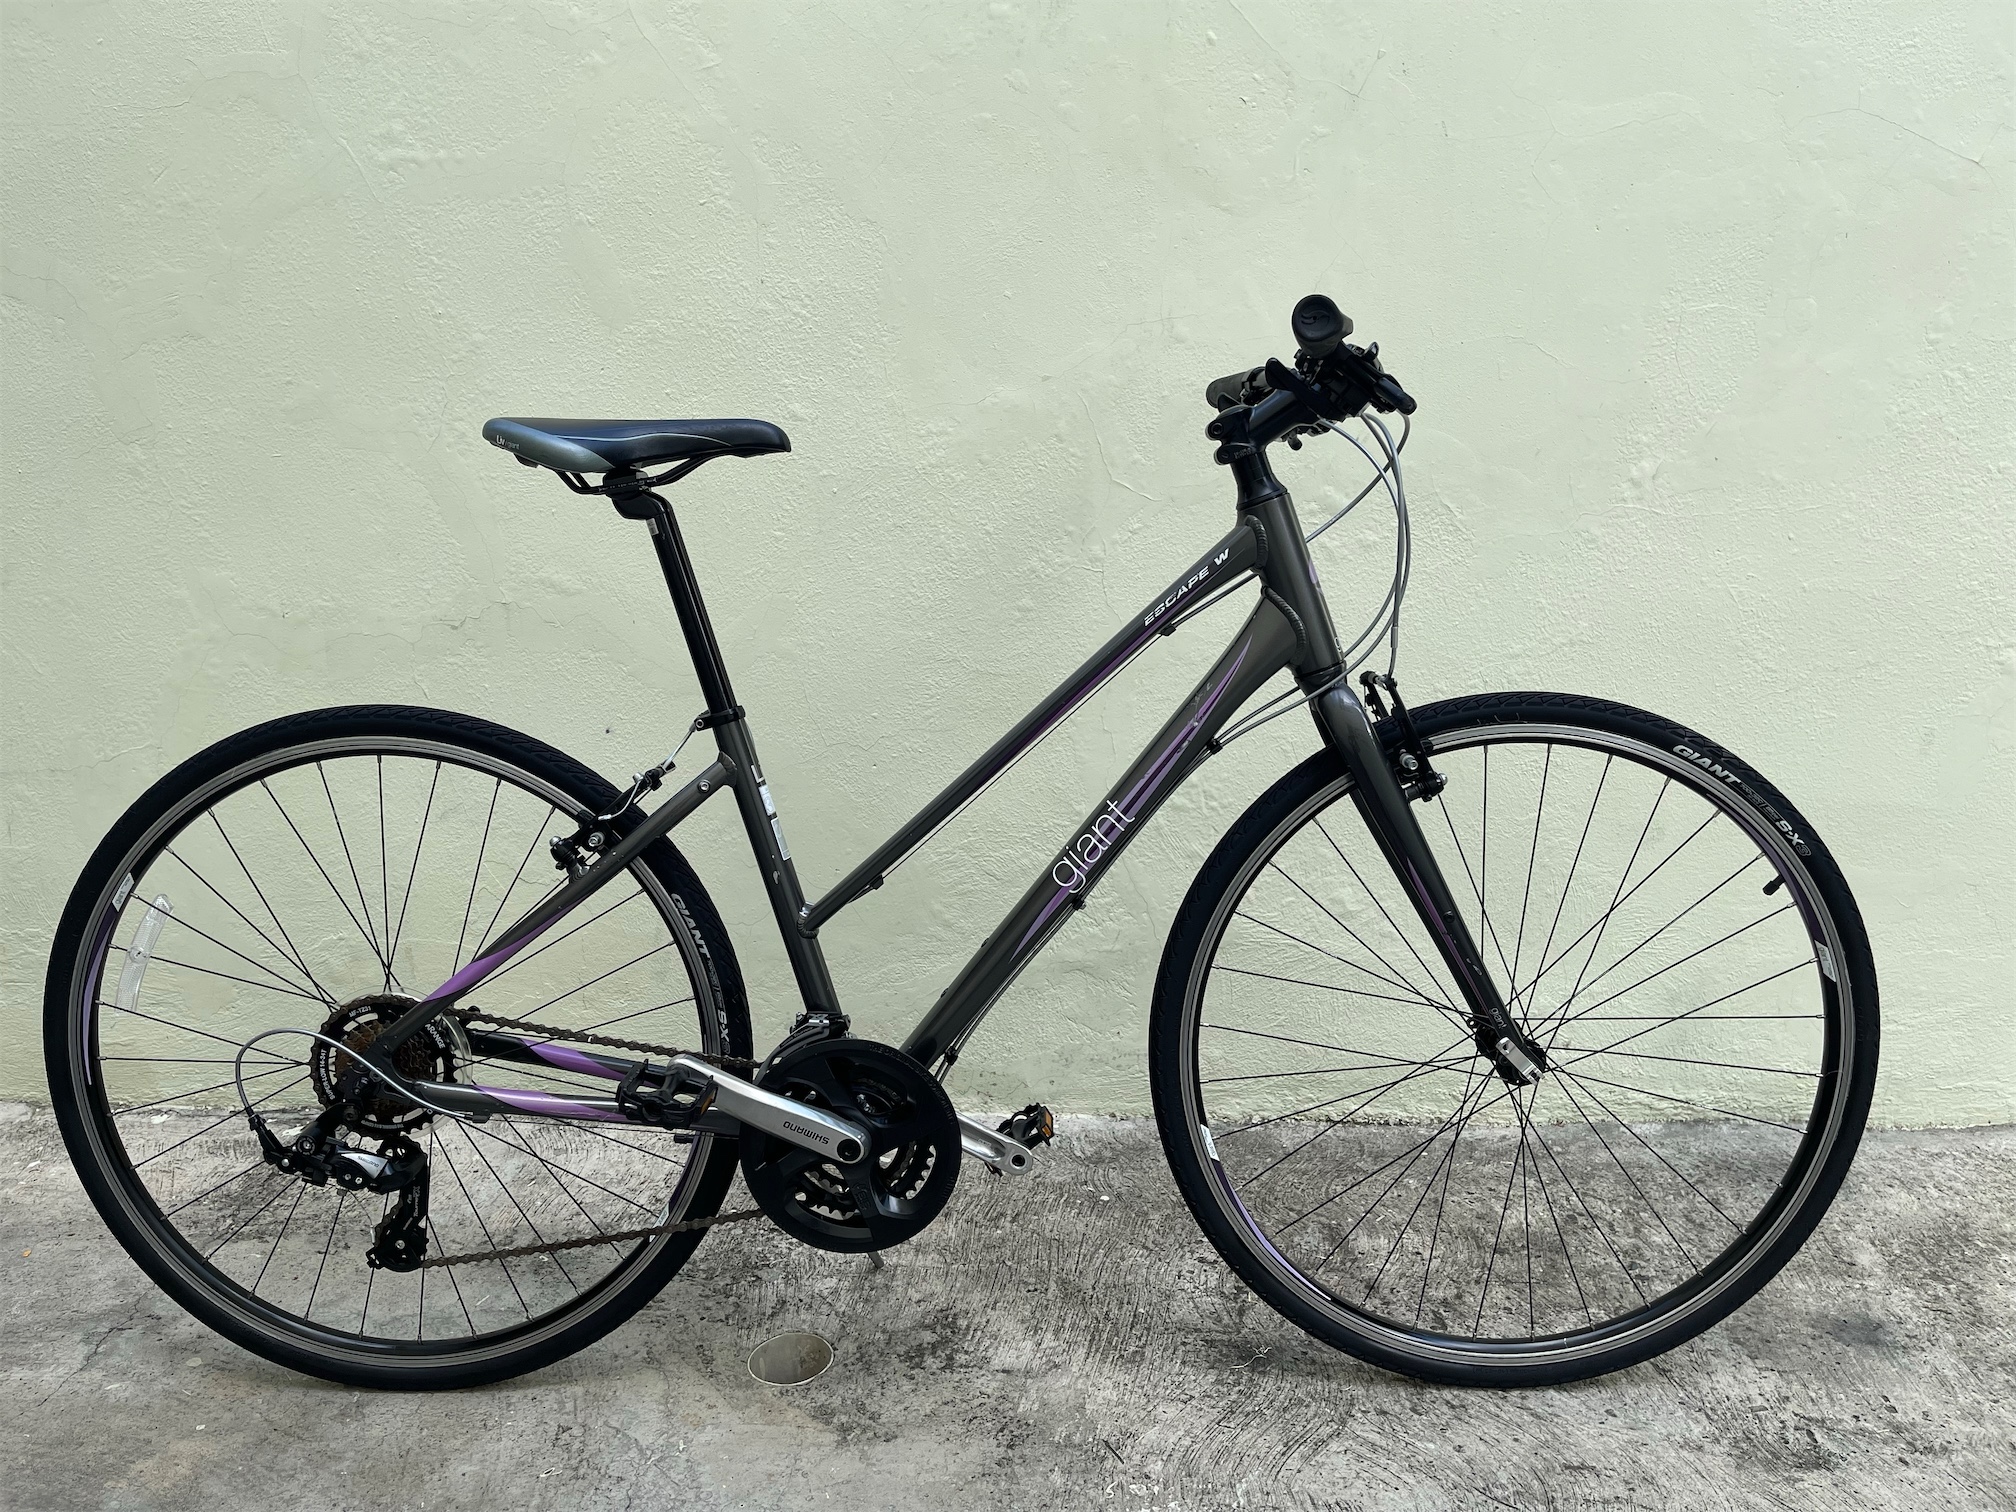 bicicletas y accesorios - Bicicleta Giant Escape W aro 700 en aluminio